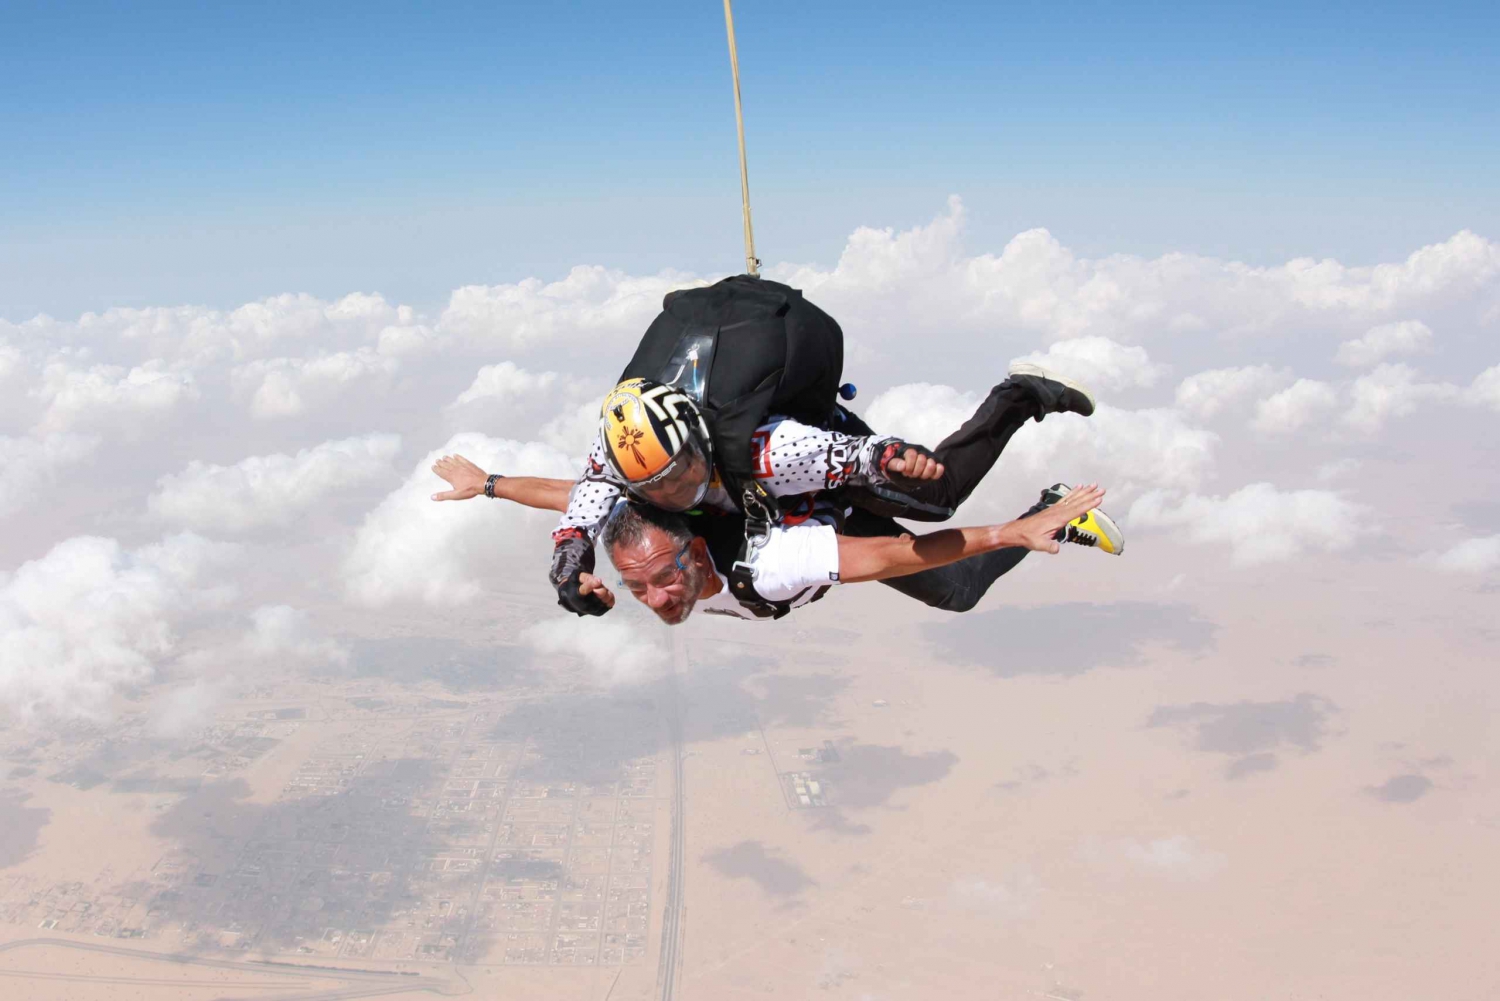 Dubai: Paraquedismo no deserto de Dubai